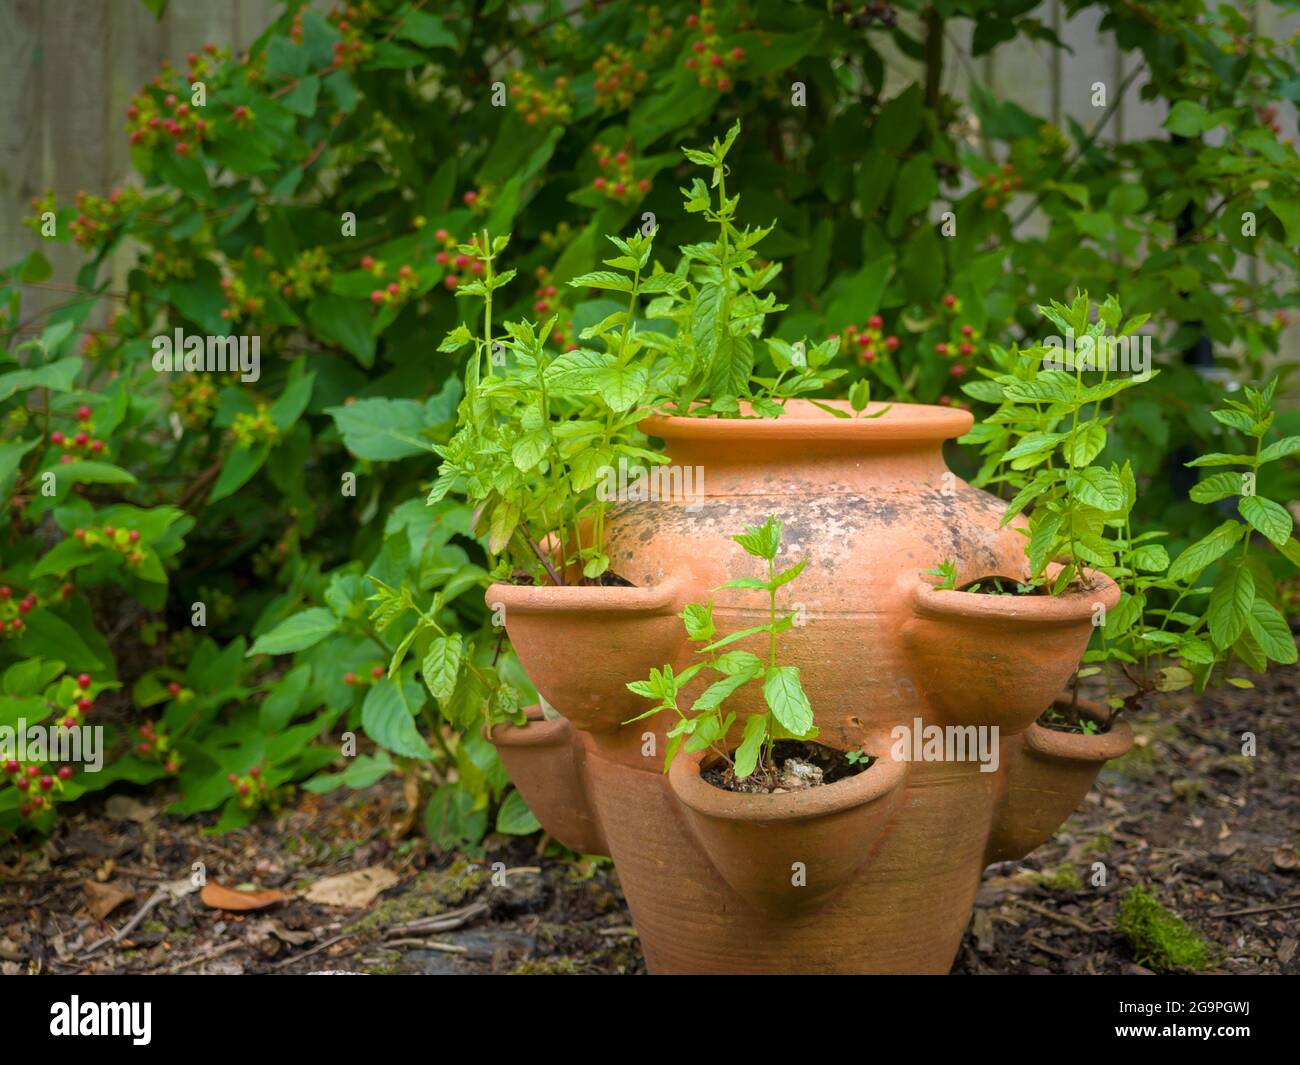 Garden Mint growing in a terracotta strawberry pot in a garden Stock Photo